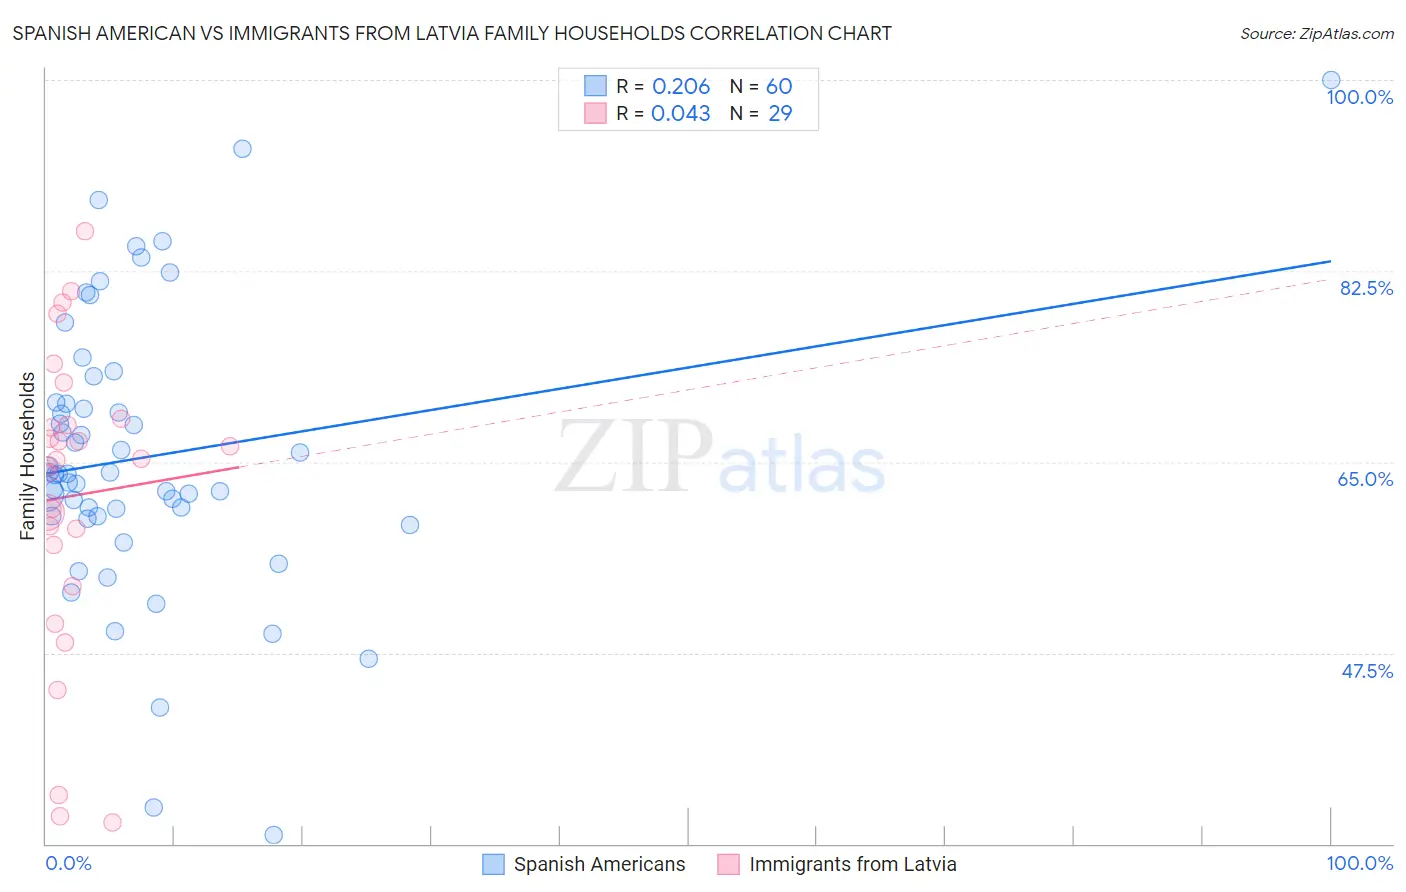 Spanish American vs Immigrants from Latvia Family Households